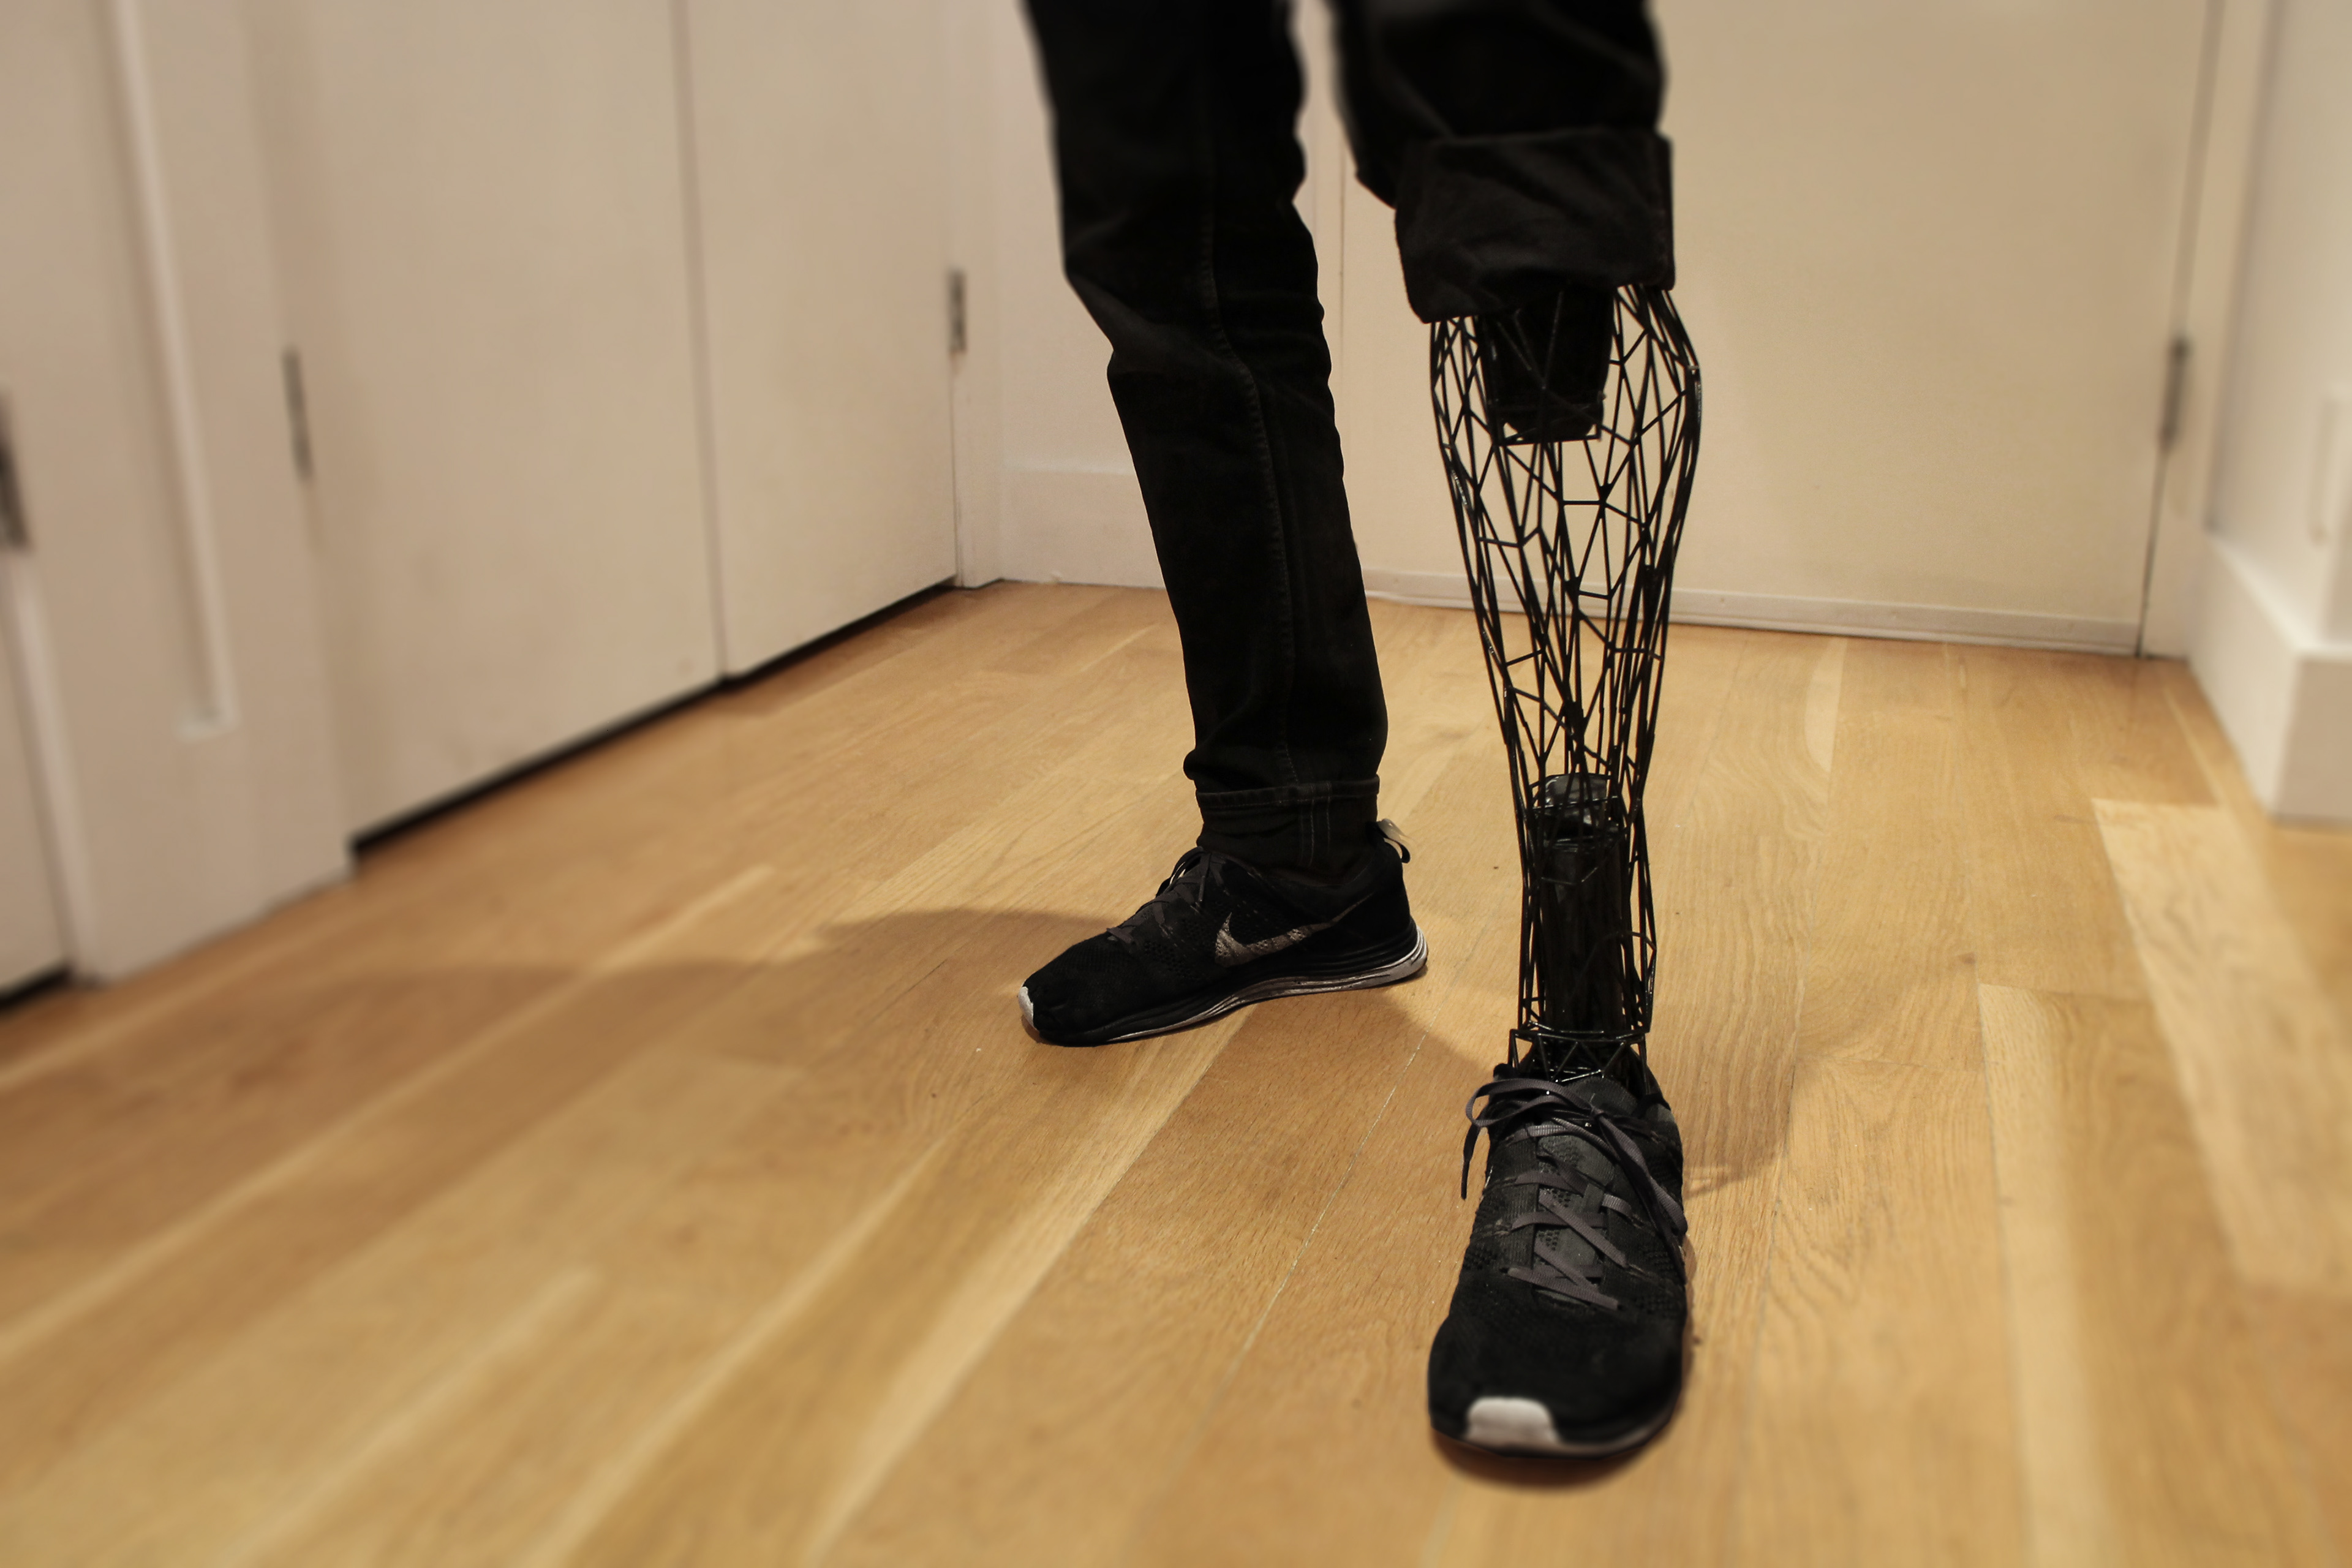 2. "Innovative Prosthetic Leg Tattoo Ideas" - wide 8